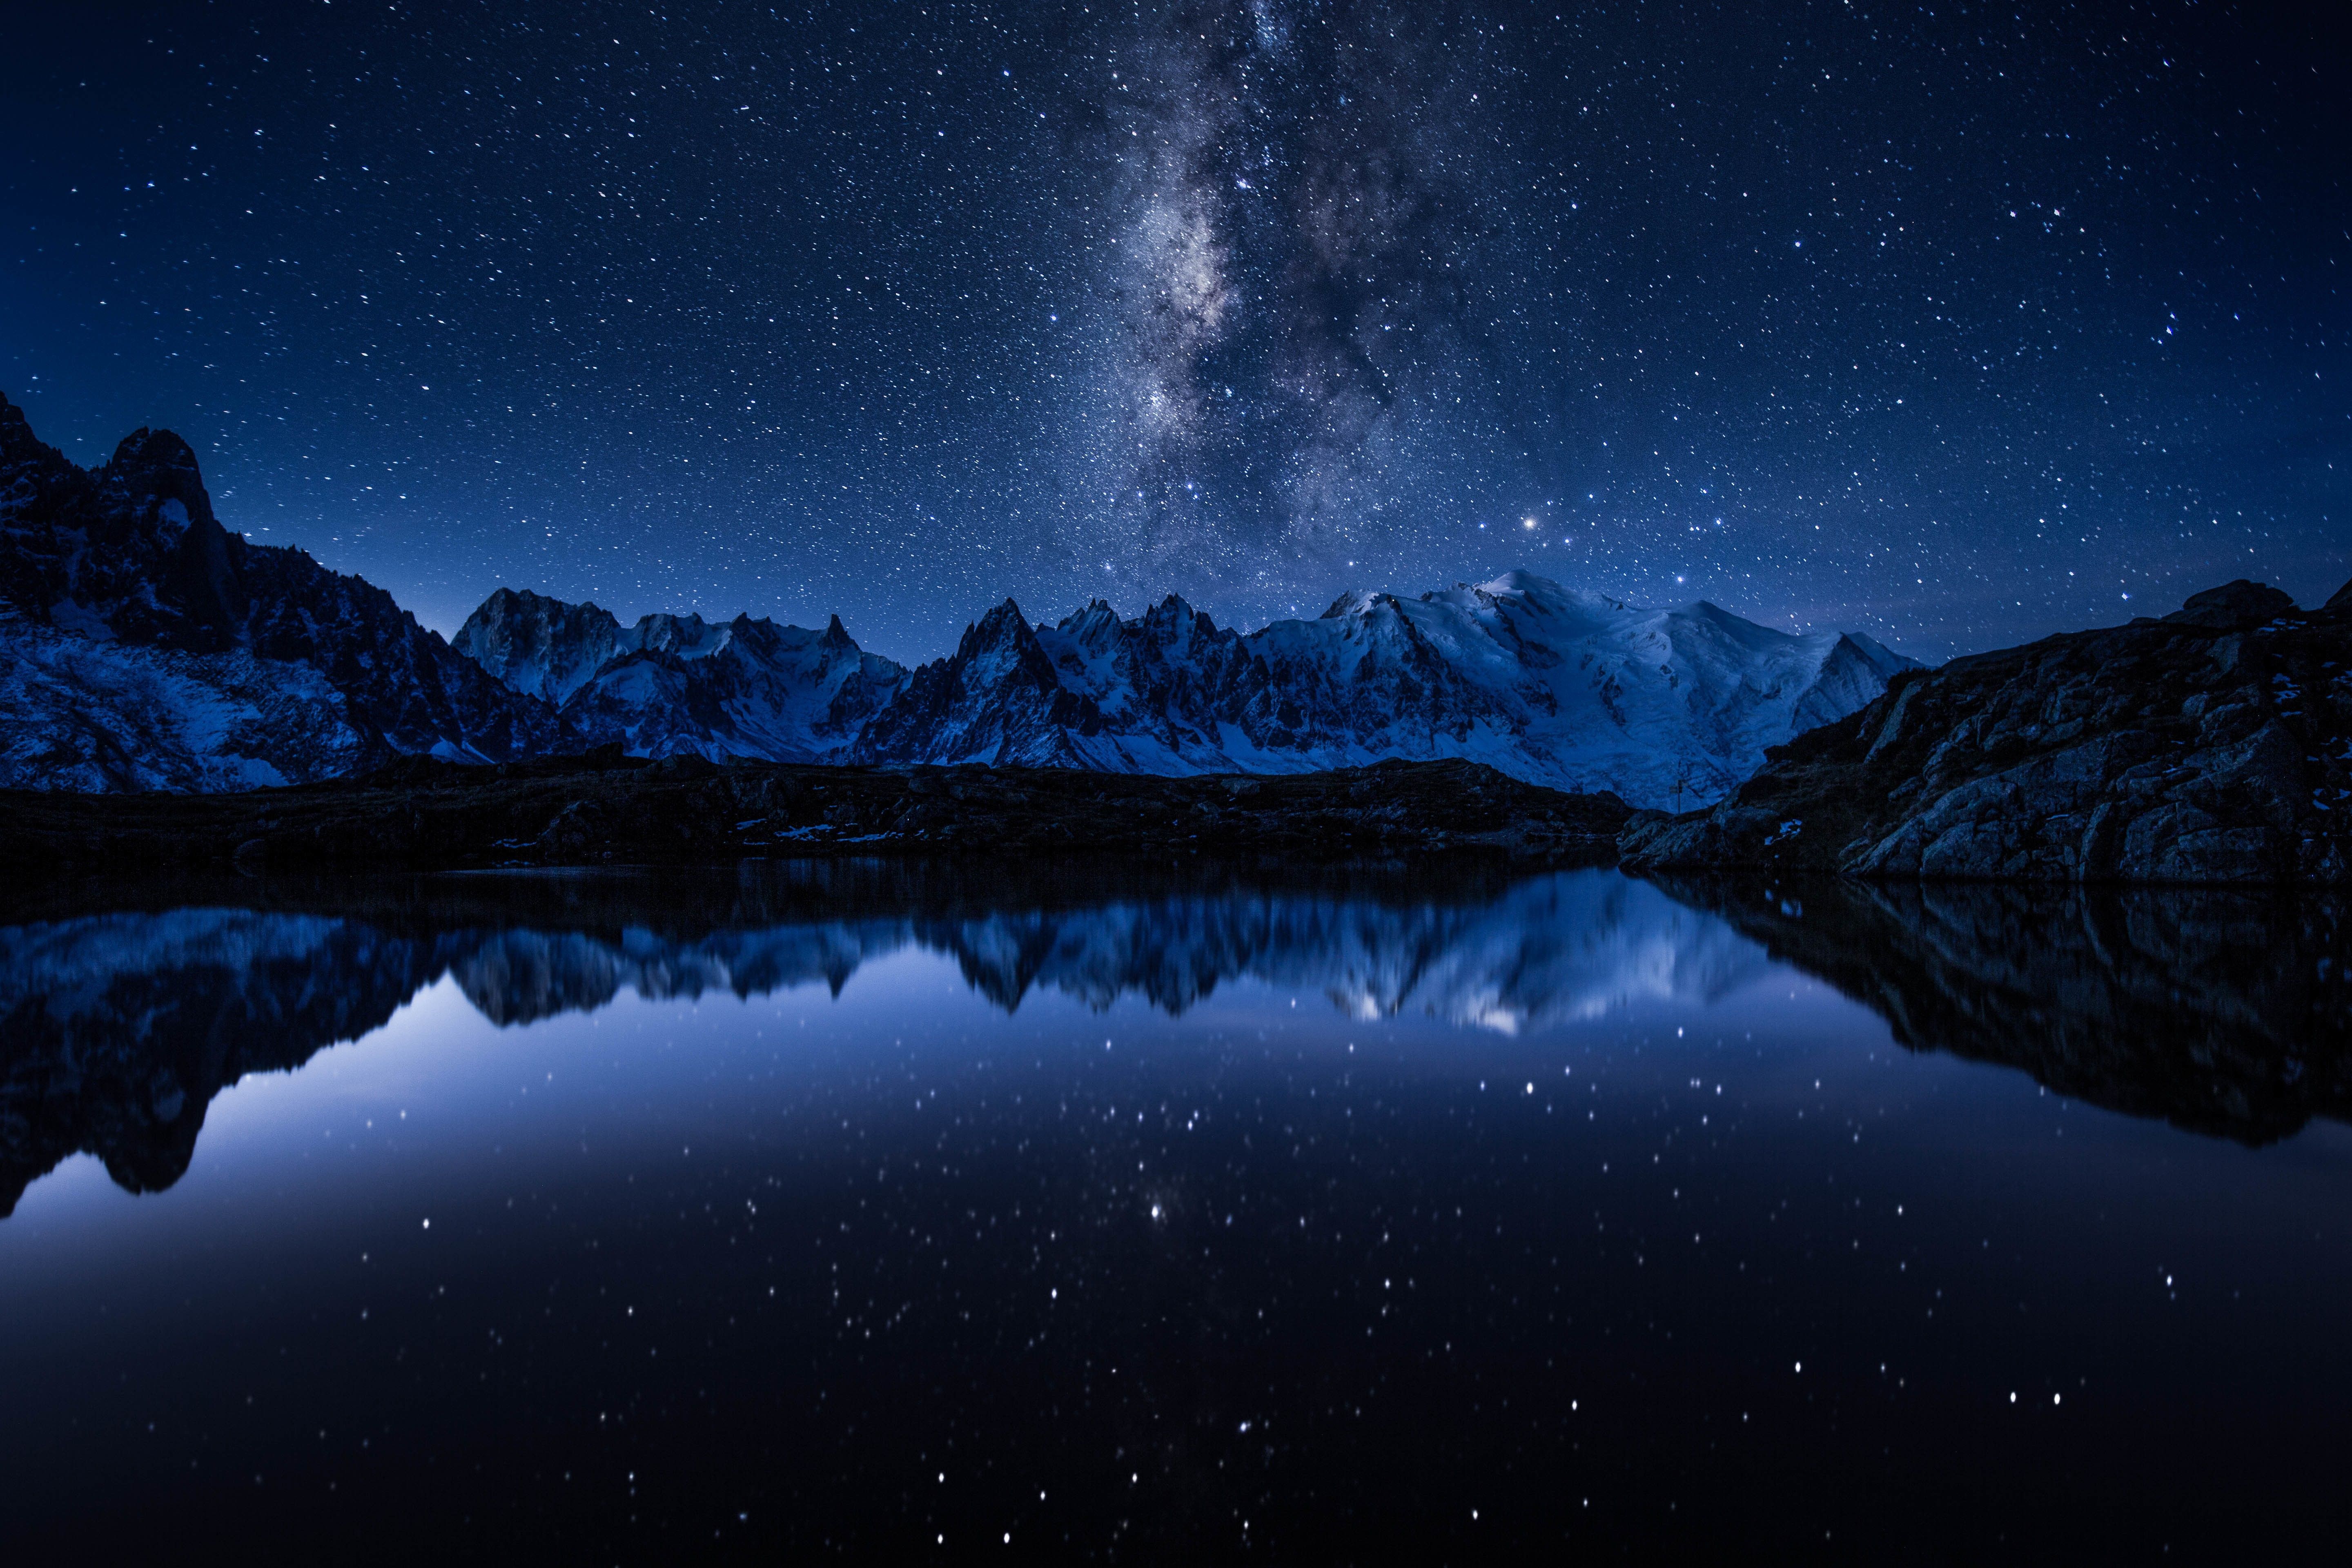 Milky Way 5k, HD Photography, 4k Wallpaper, Image, Background